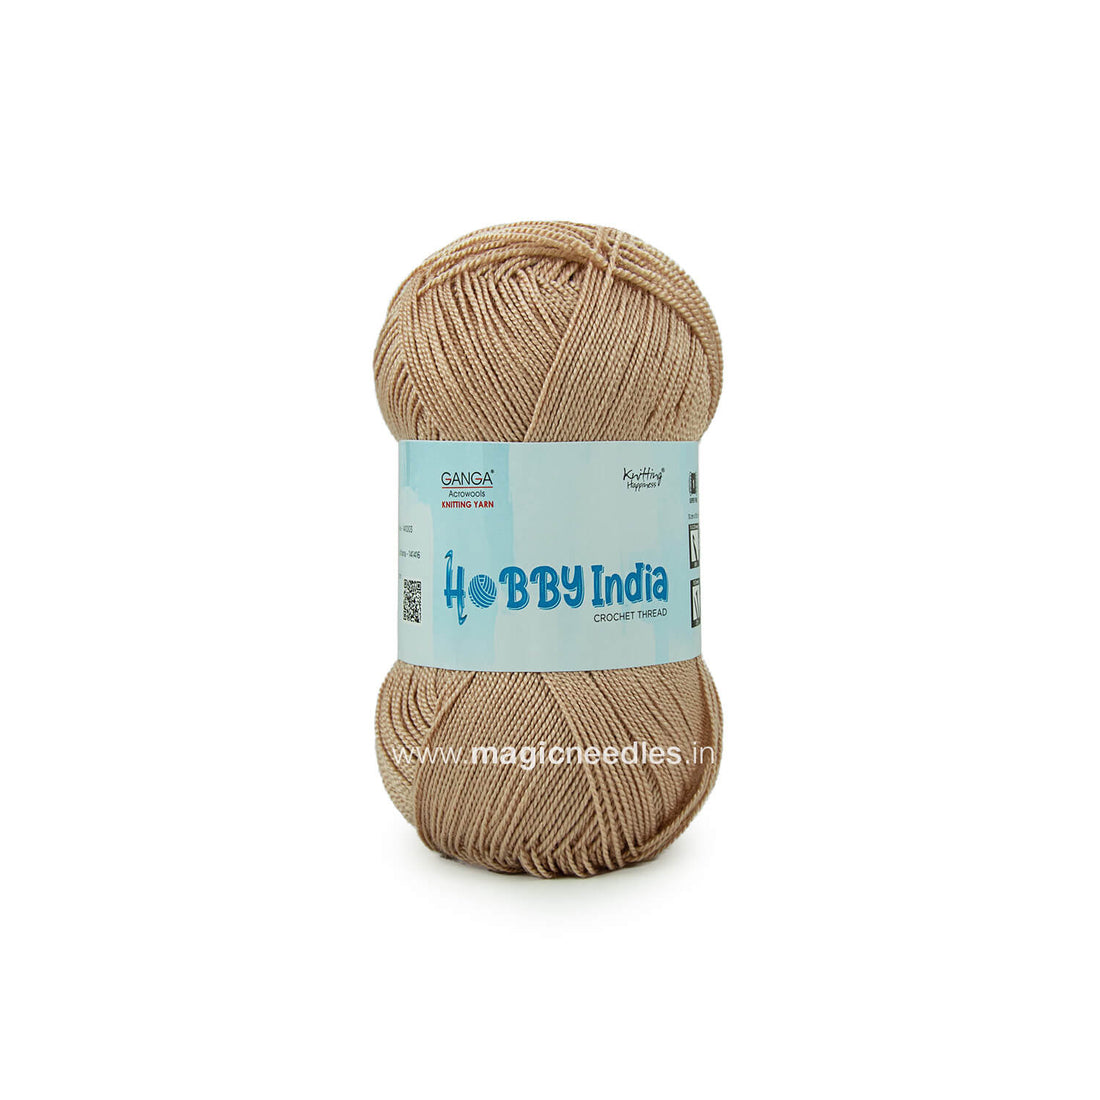 Ganga Hobby India Crochet Thread - Beige 62